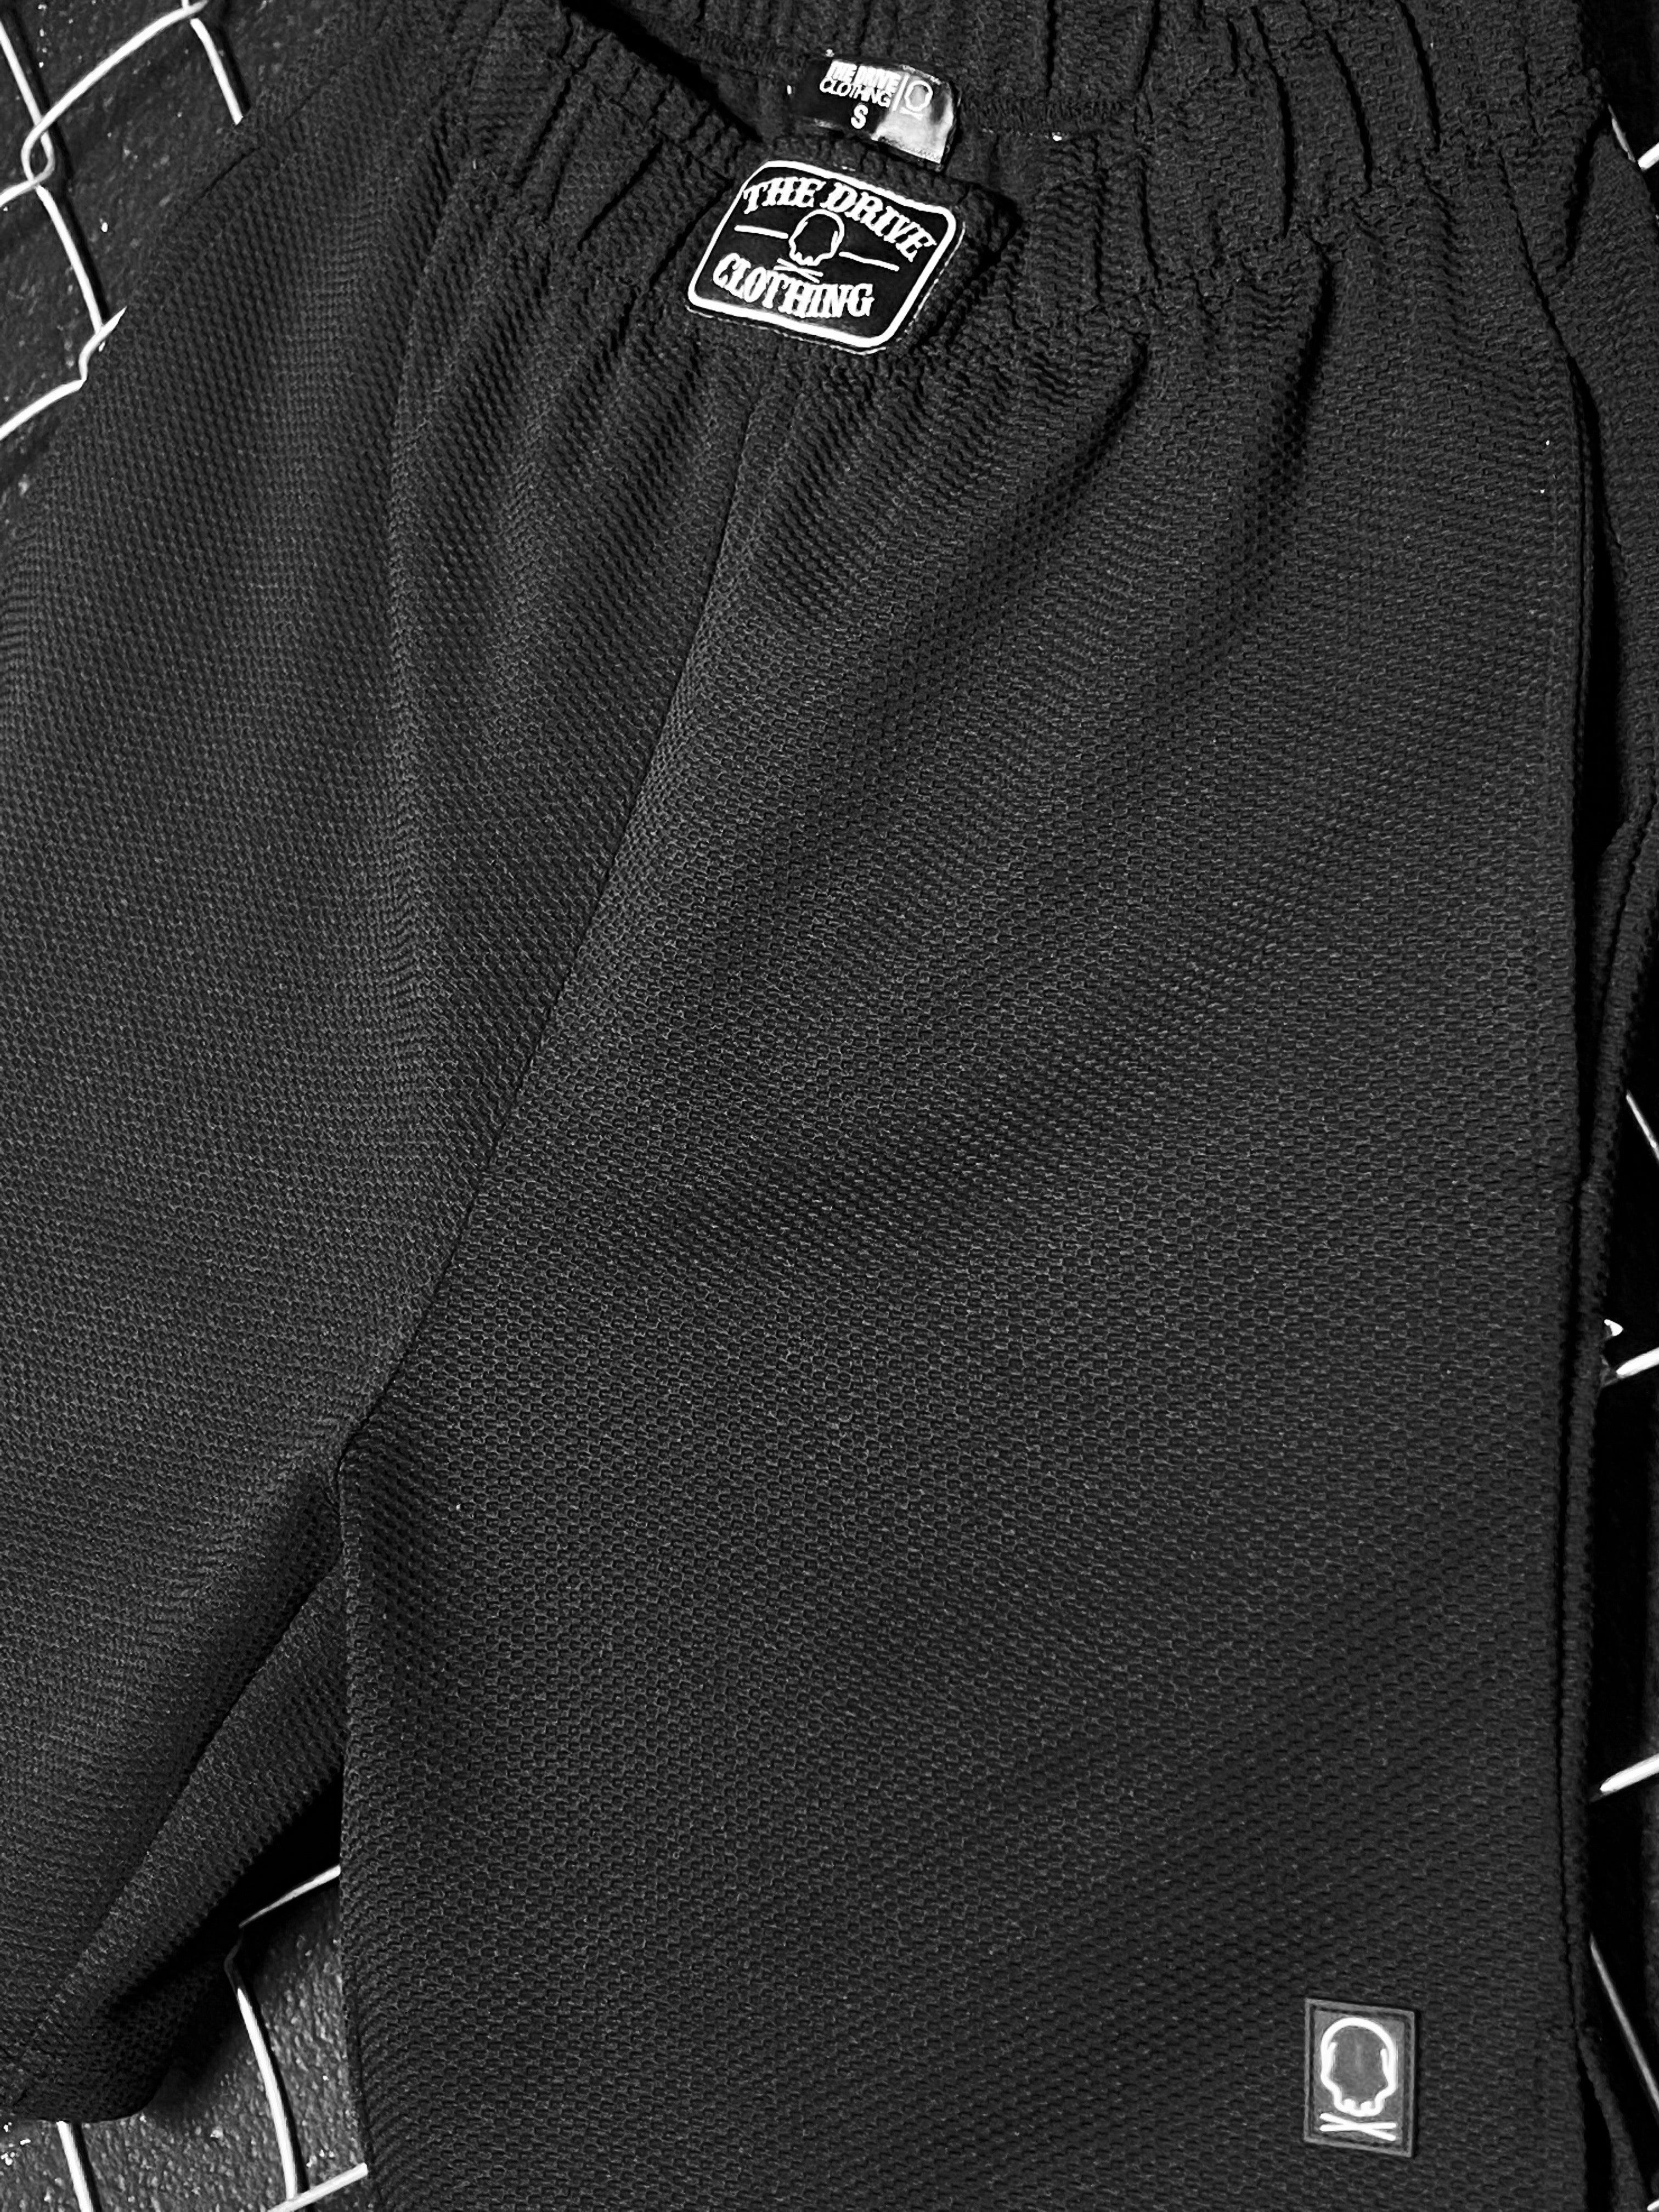 TDC BLACK BASKETBALL SHORTS - The Drive Clothing